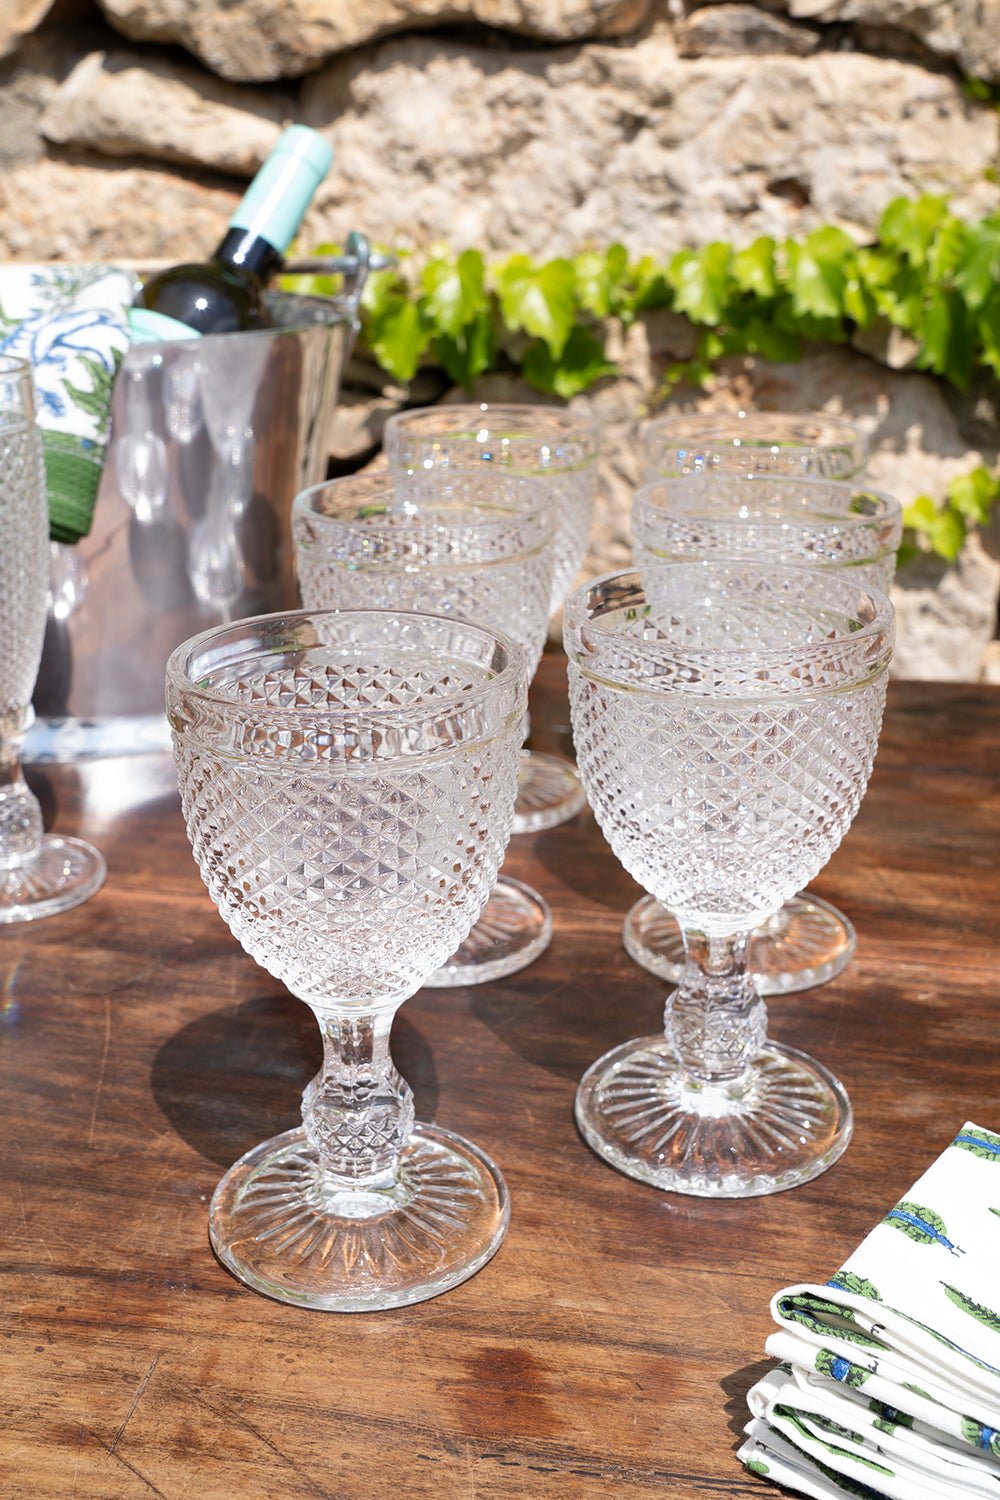 Copas personalizadas para bodas de plata cristal Bohemia